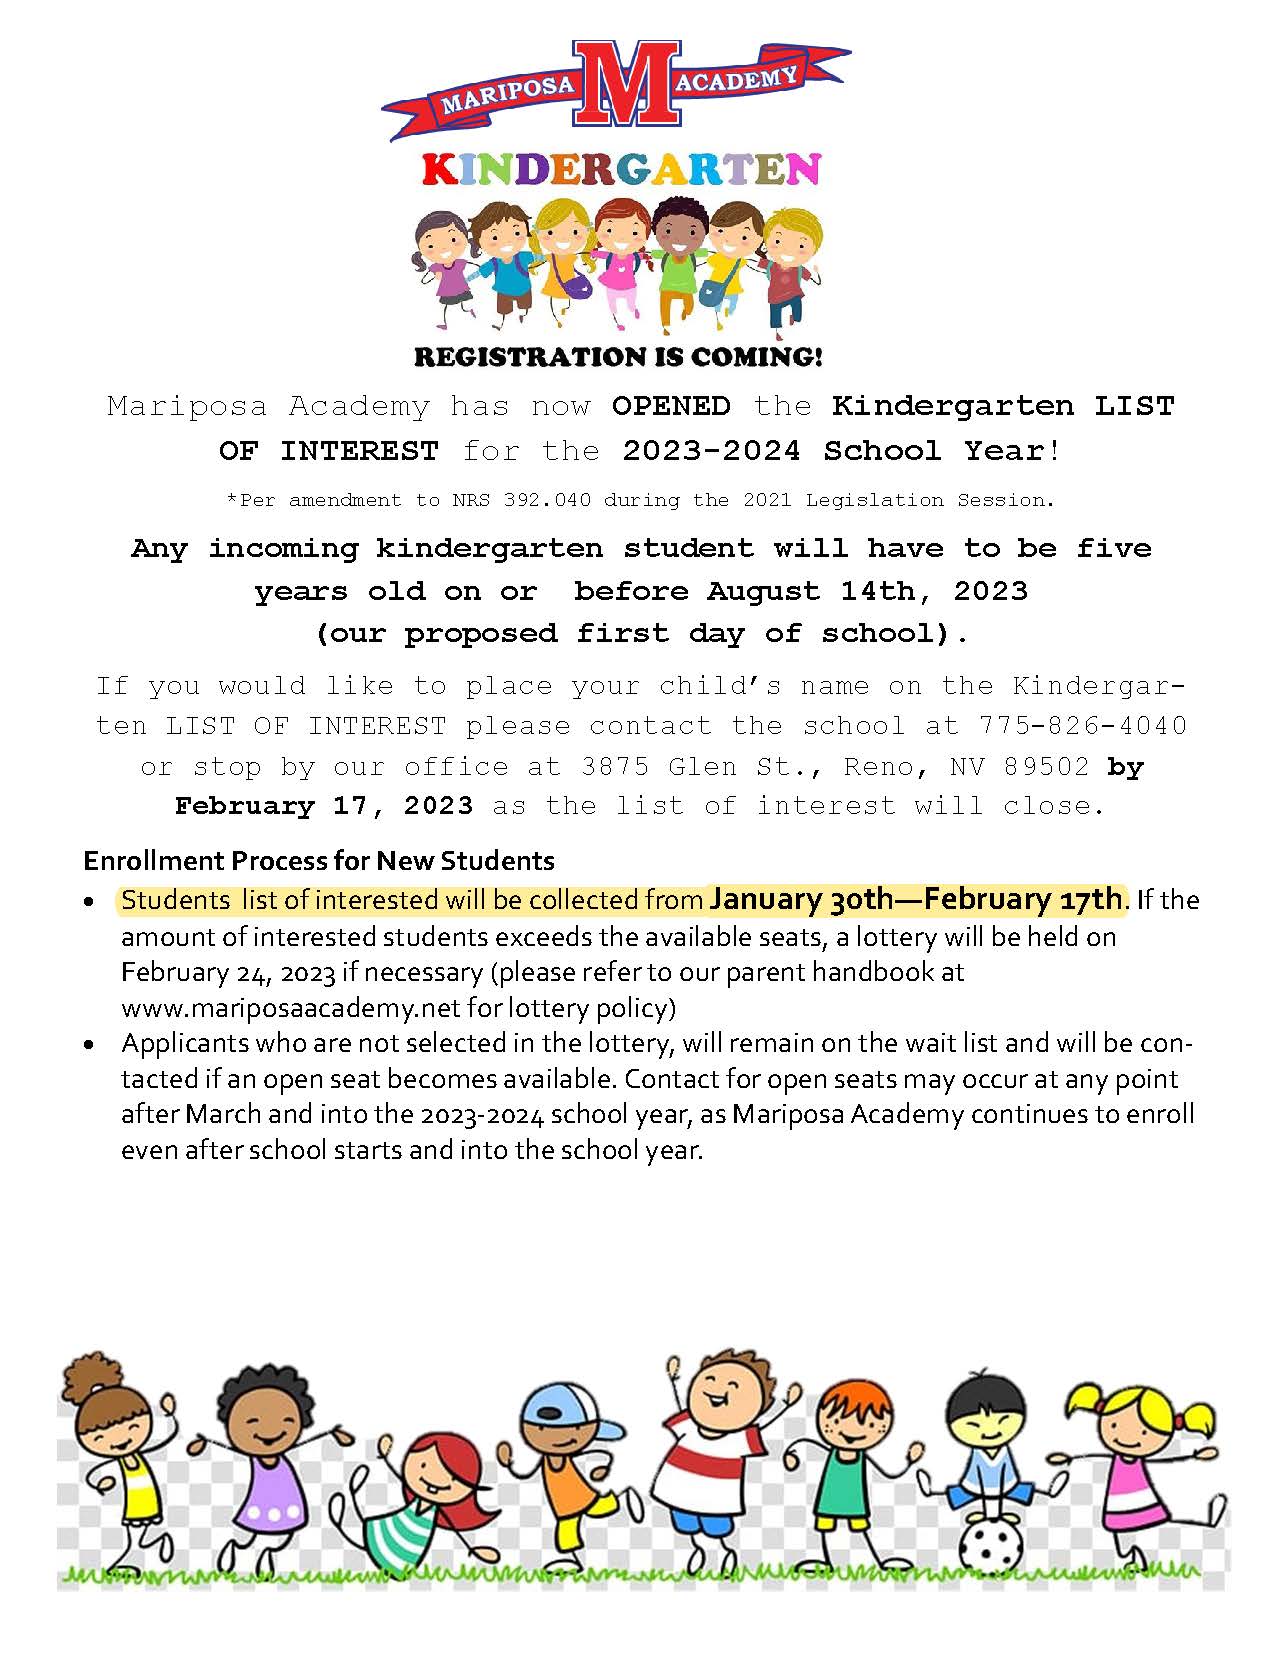 Kinder List of Interest opening Monday, January 30, 2023